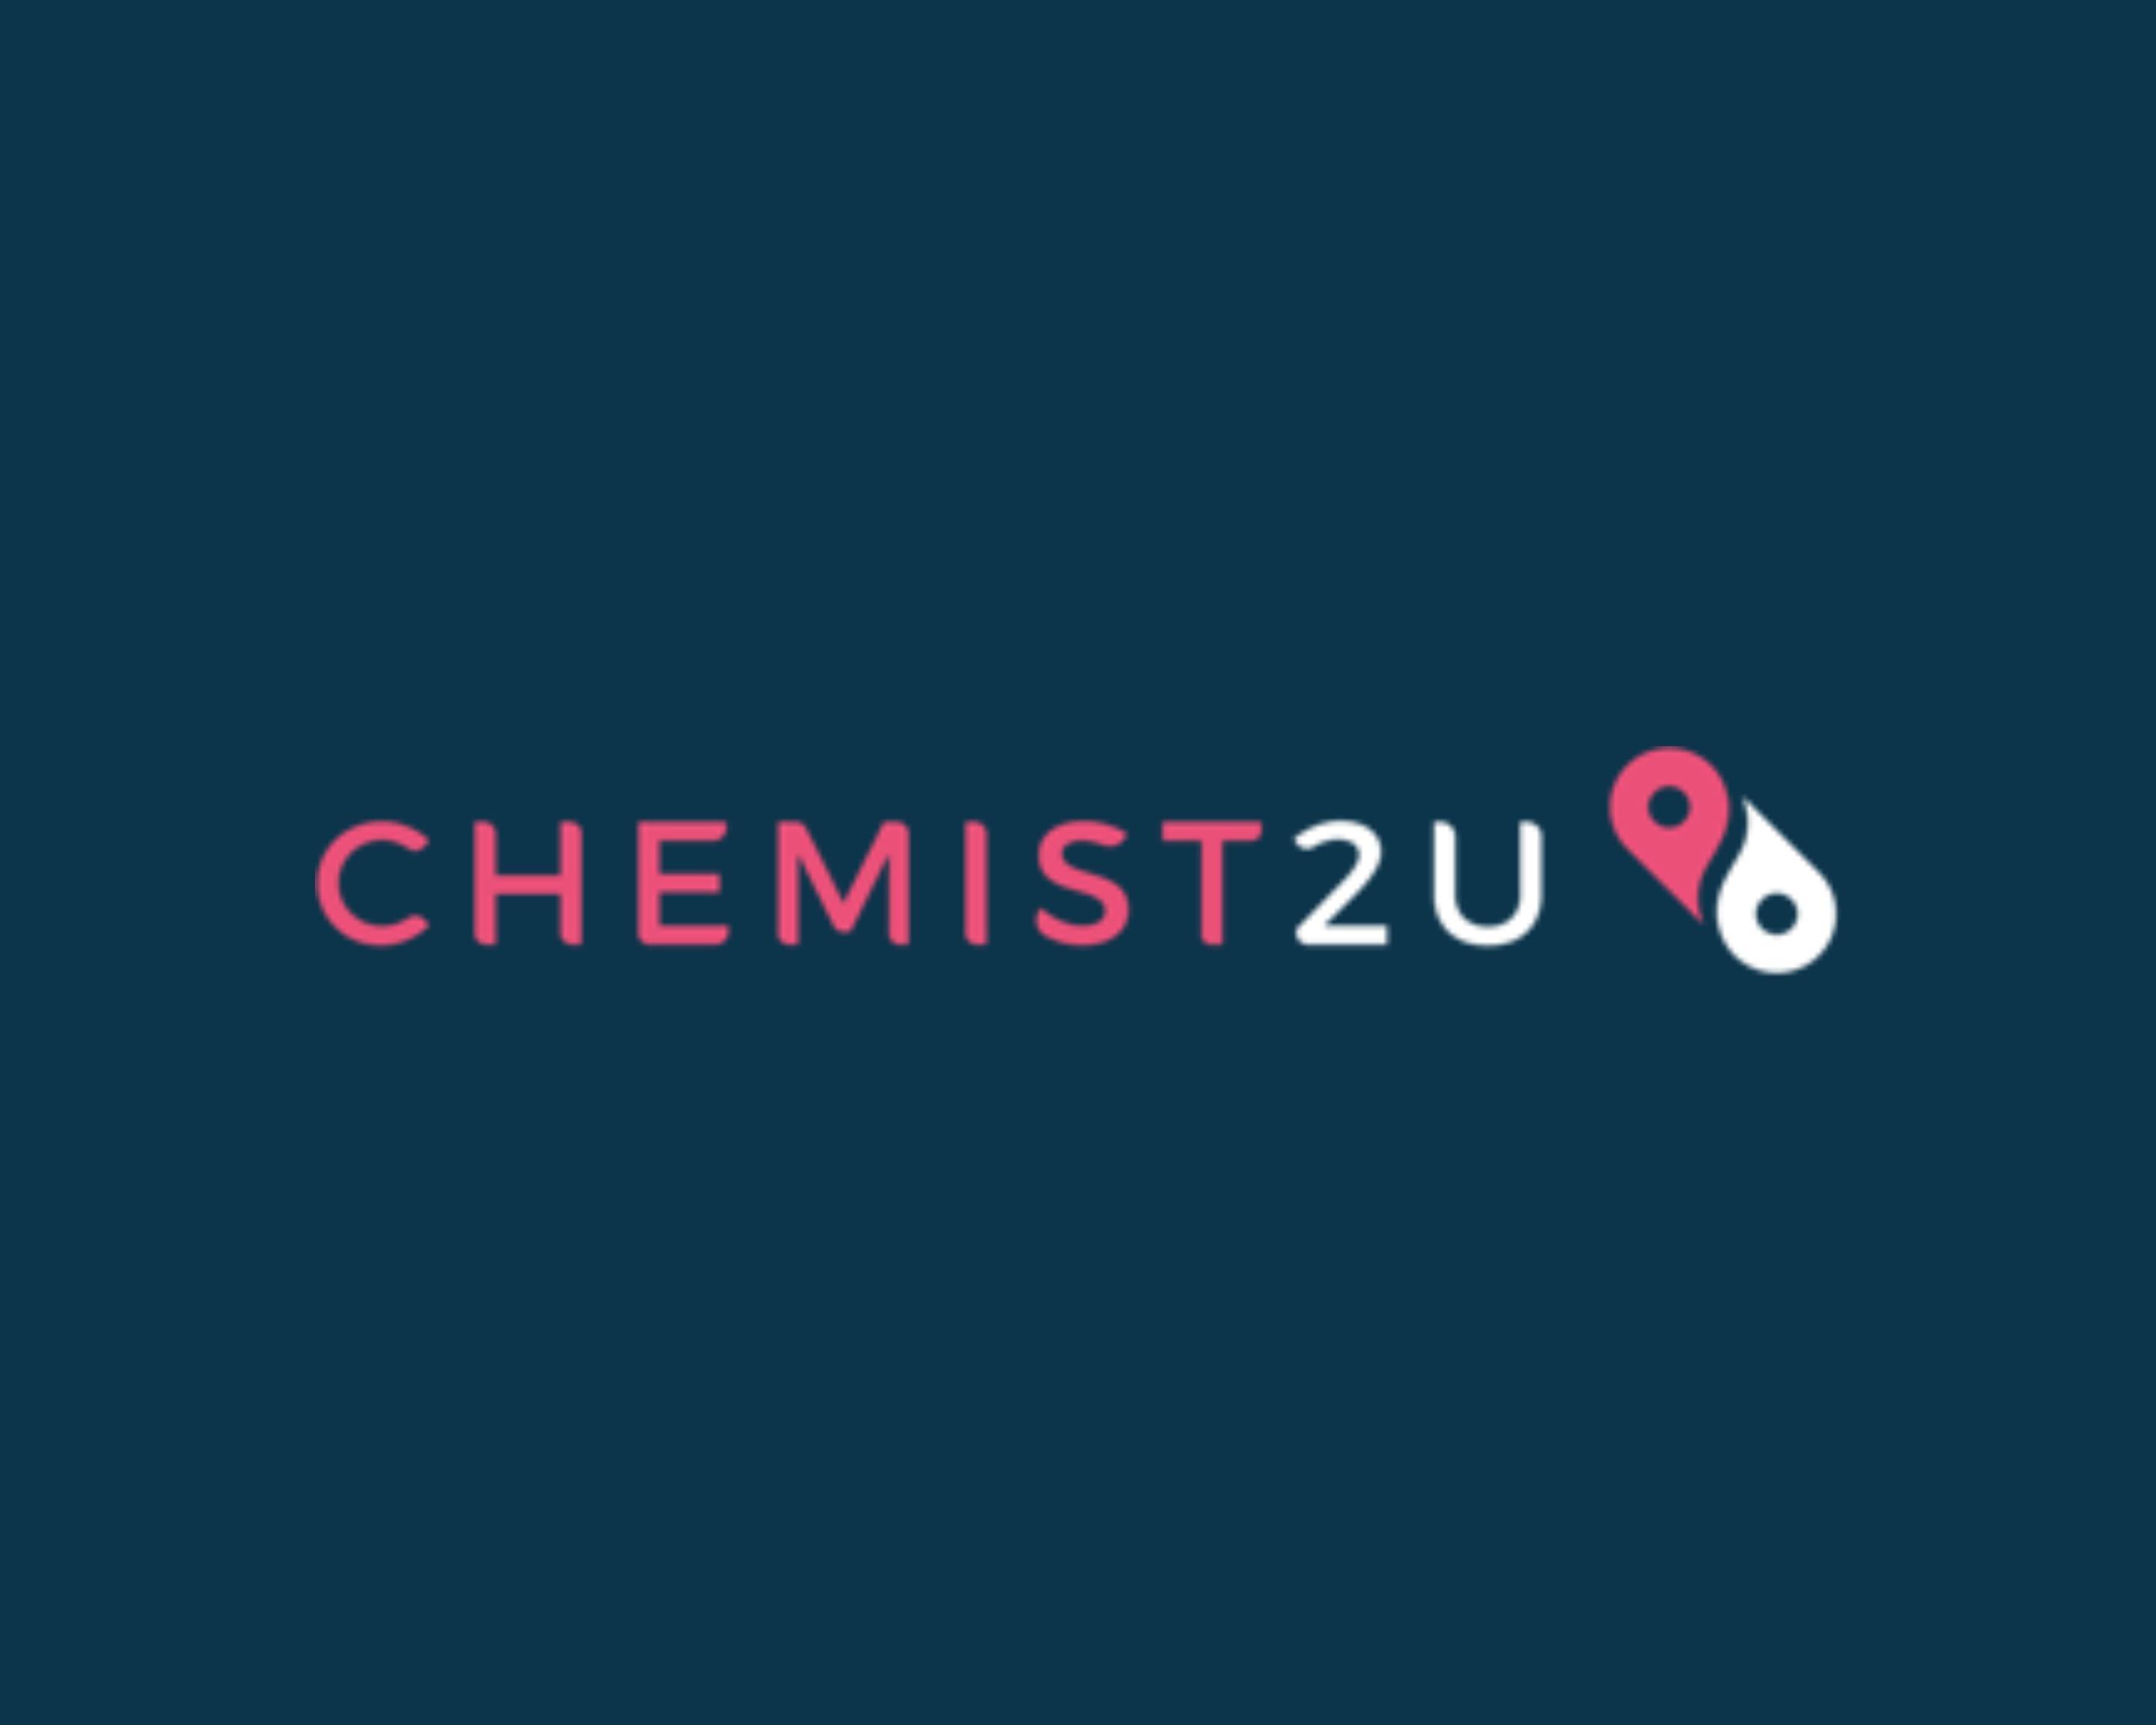 (Chemist2U) Capital Chemist Southlands